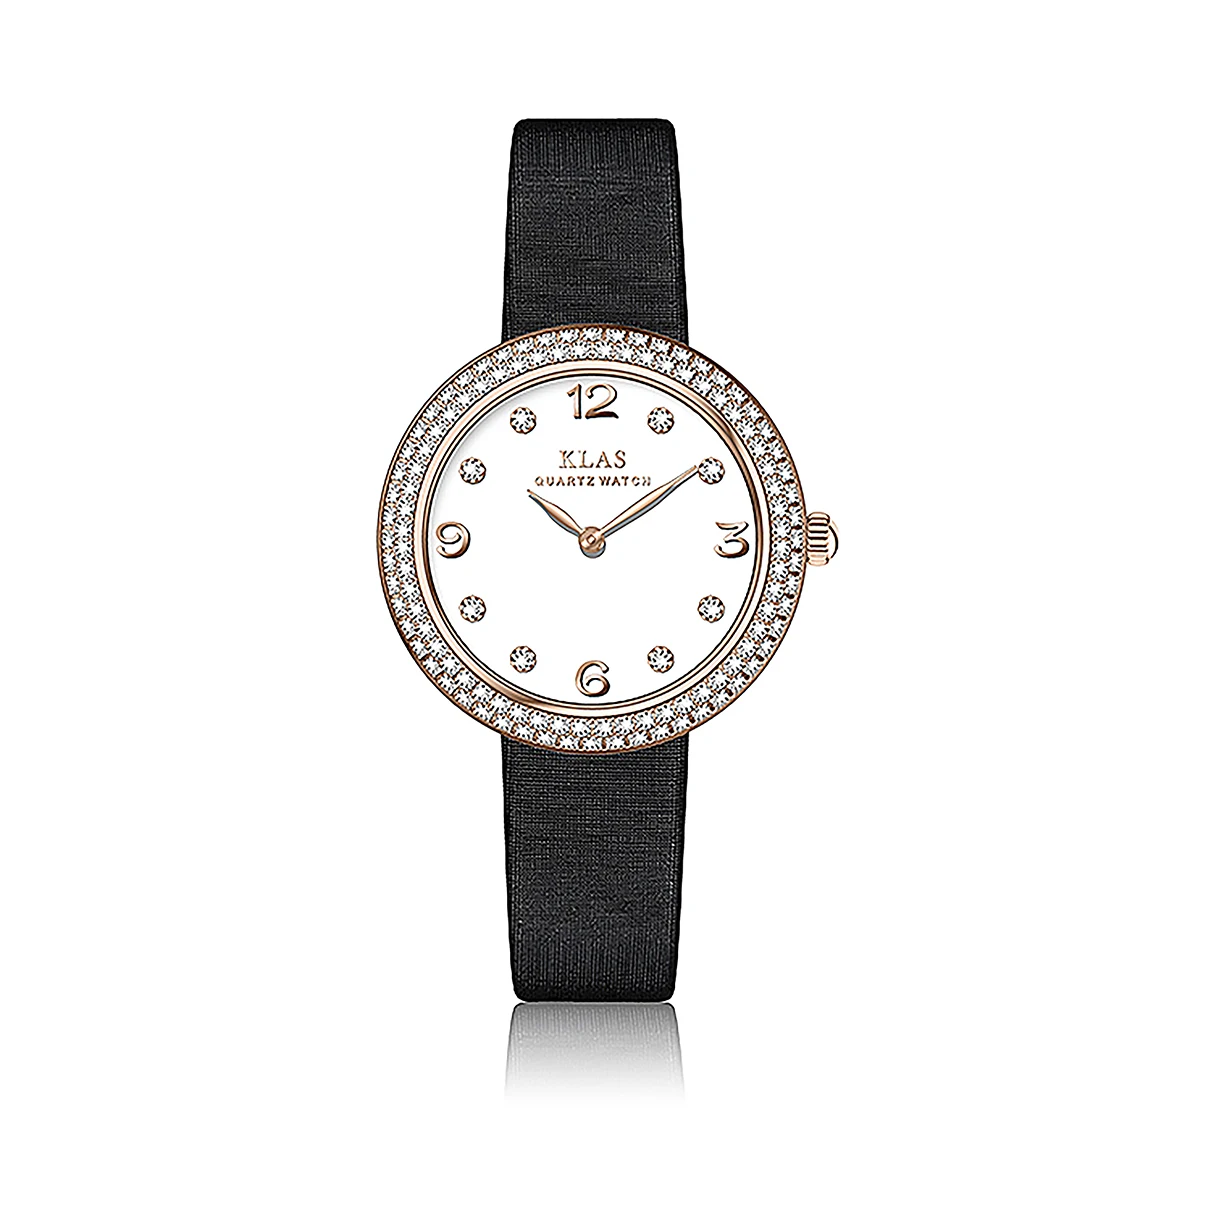 KLAS Brand CONTRACTED TIDE FASHION FEMALE WATCH женские часы gift LOGO custom watch factory